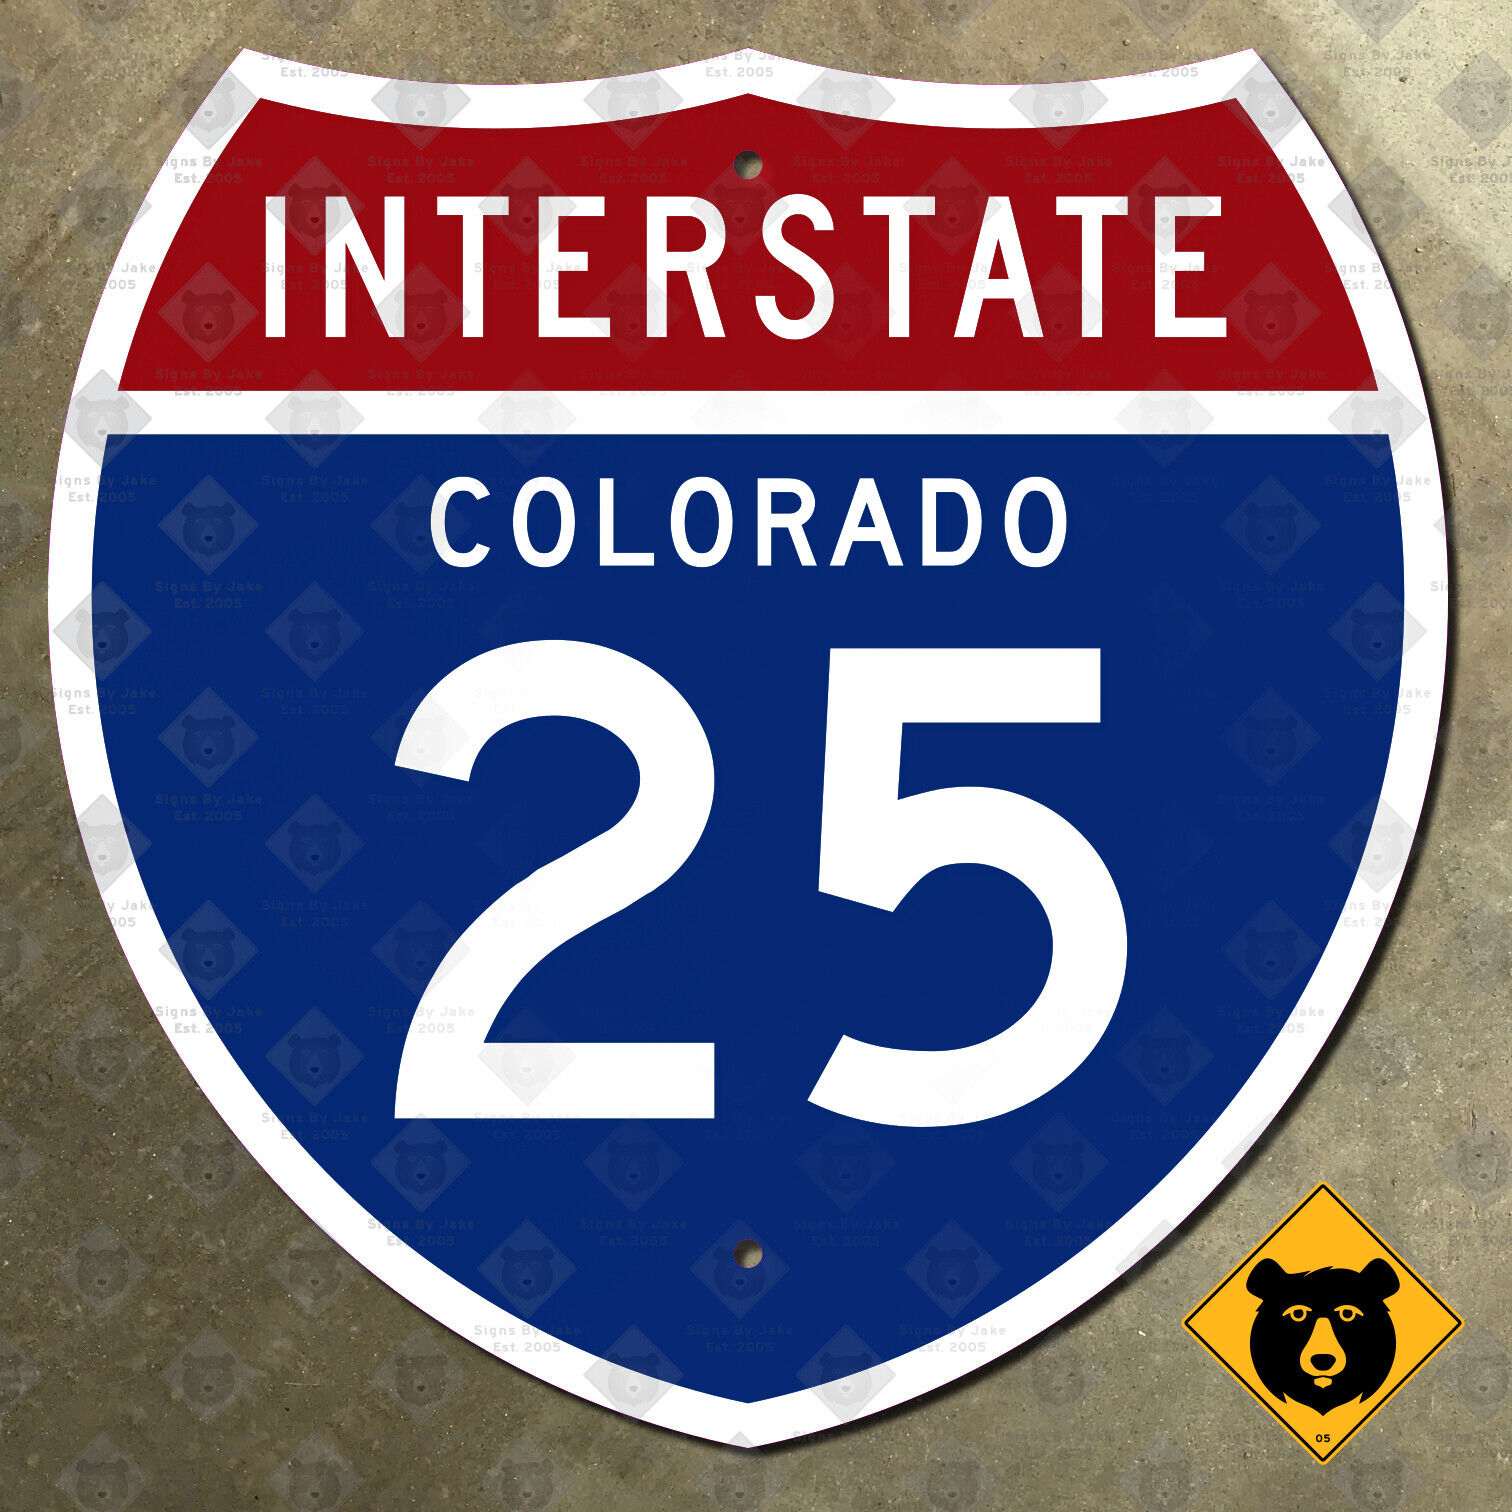 Colorado Interstate 25 highway route sign 1957 Springs Denver 18x18